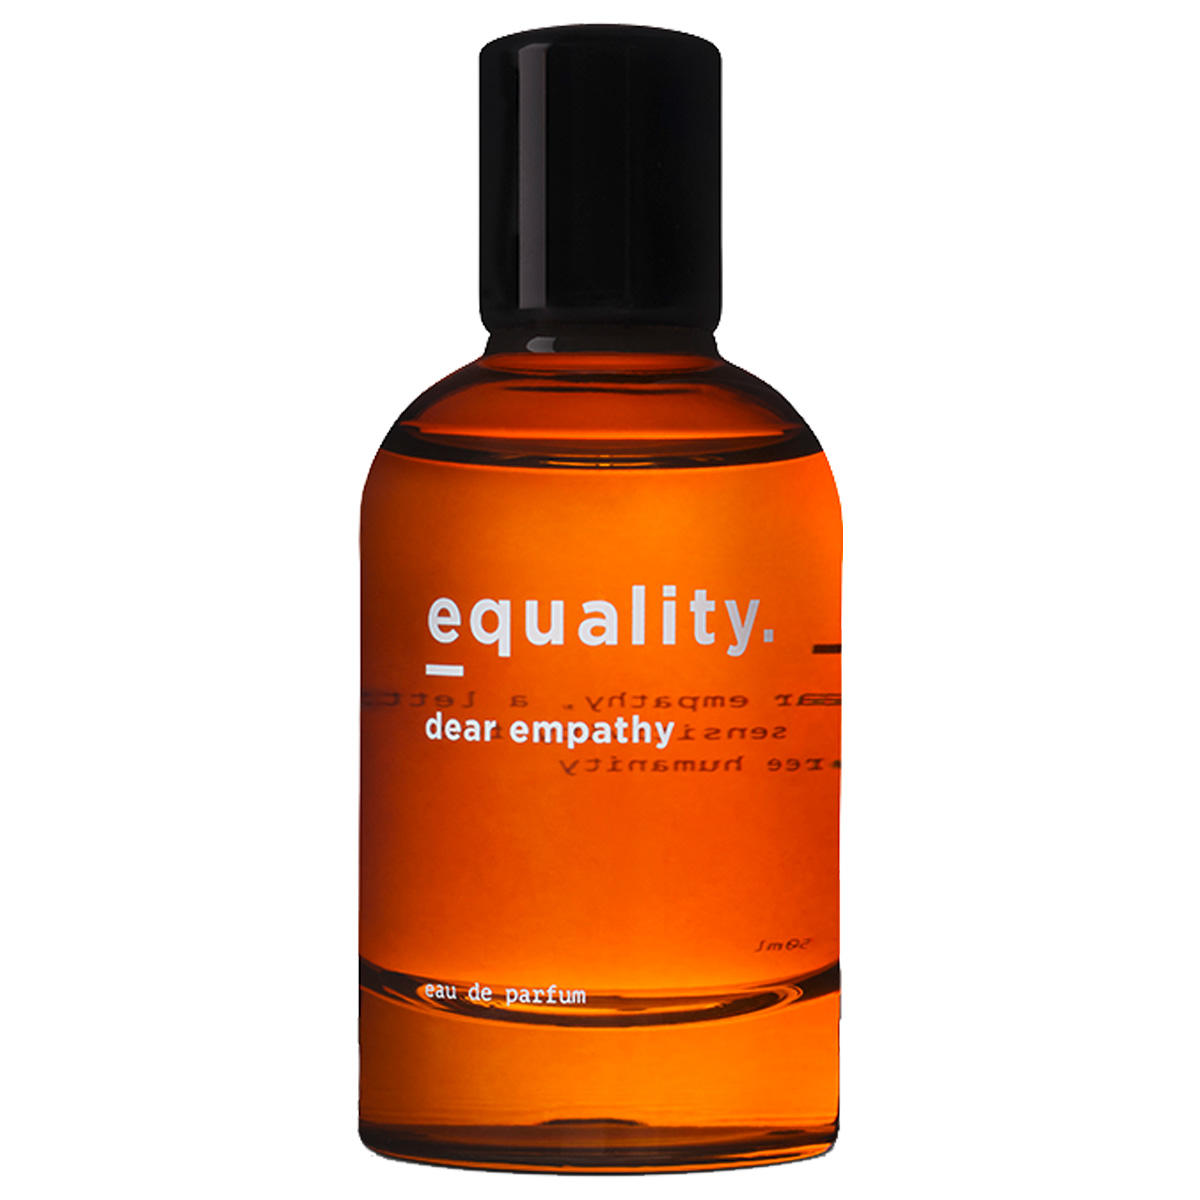 equality. dear empathy Eau de Parfum 50 ml - 1